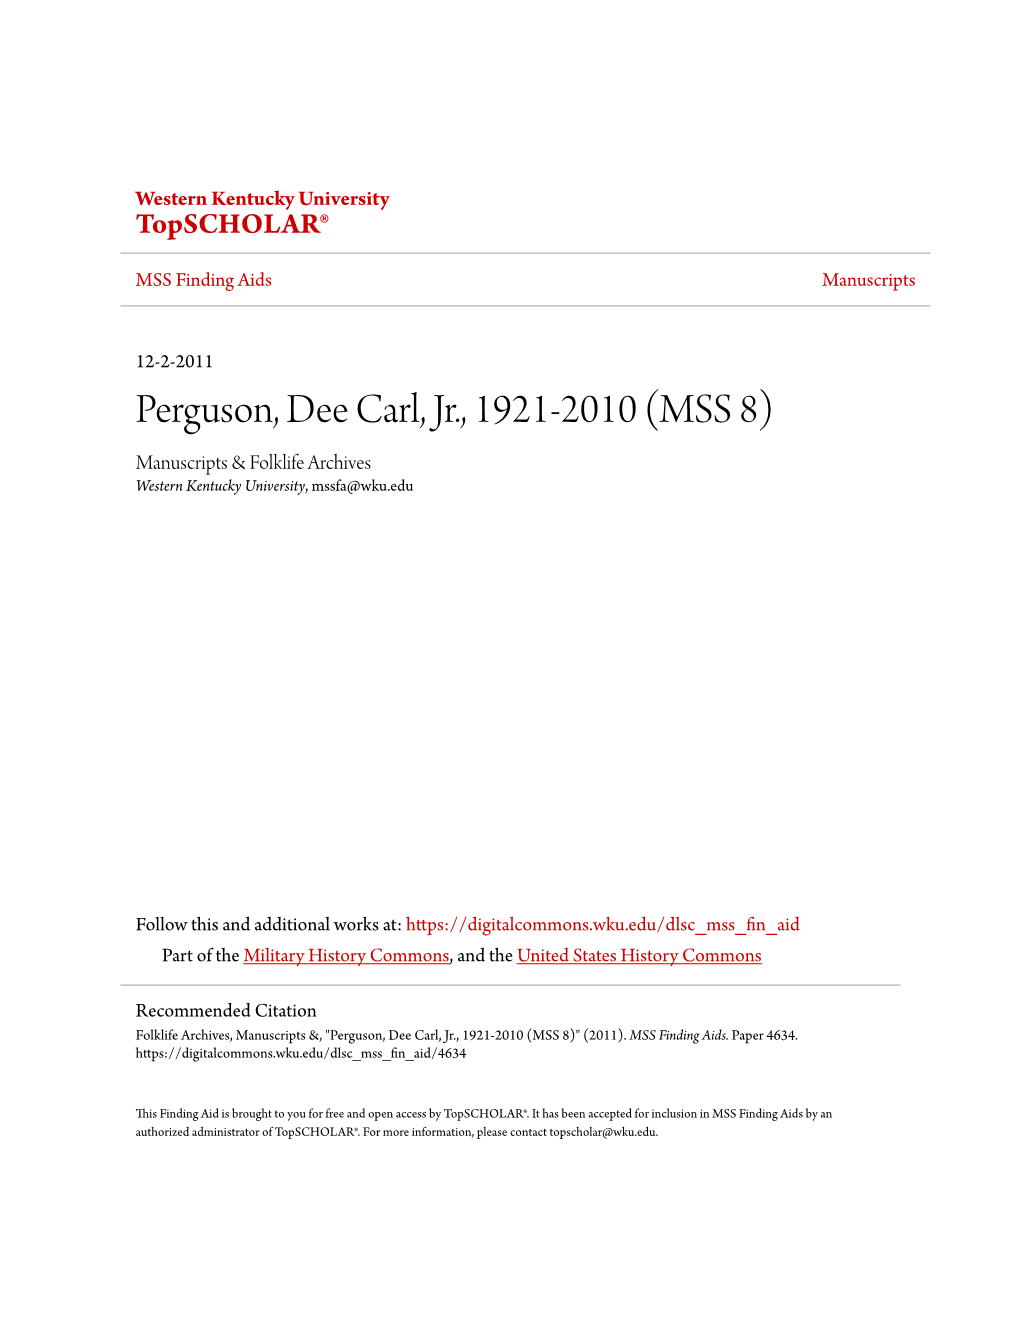 Perguson, Dee Carl, Jr., 1921-2010 (MSS 8) Manuscripts & Folklife Archives Western Kentucky University, Mssfa@Wku.Edu